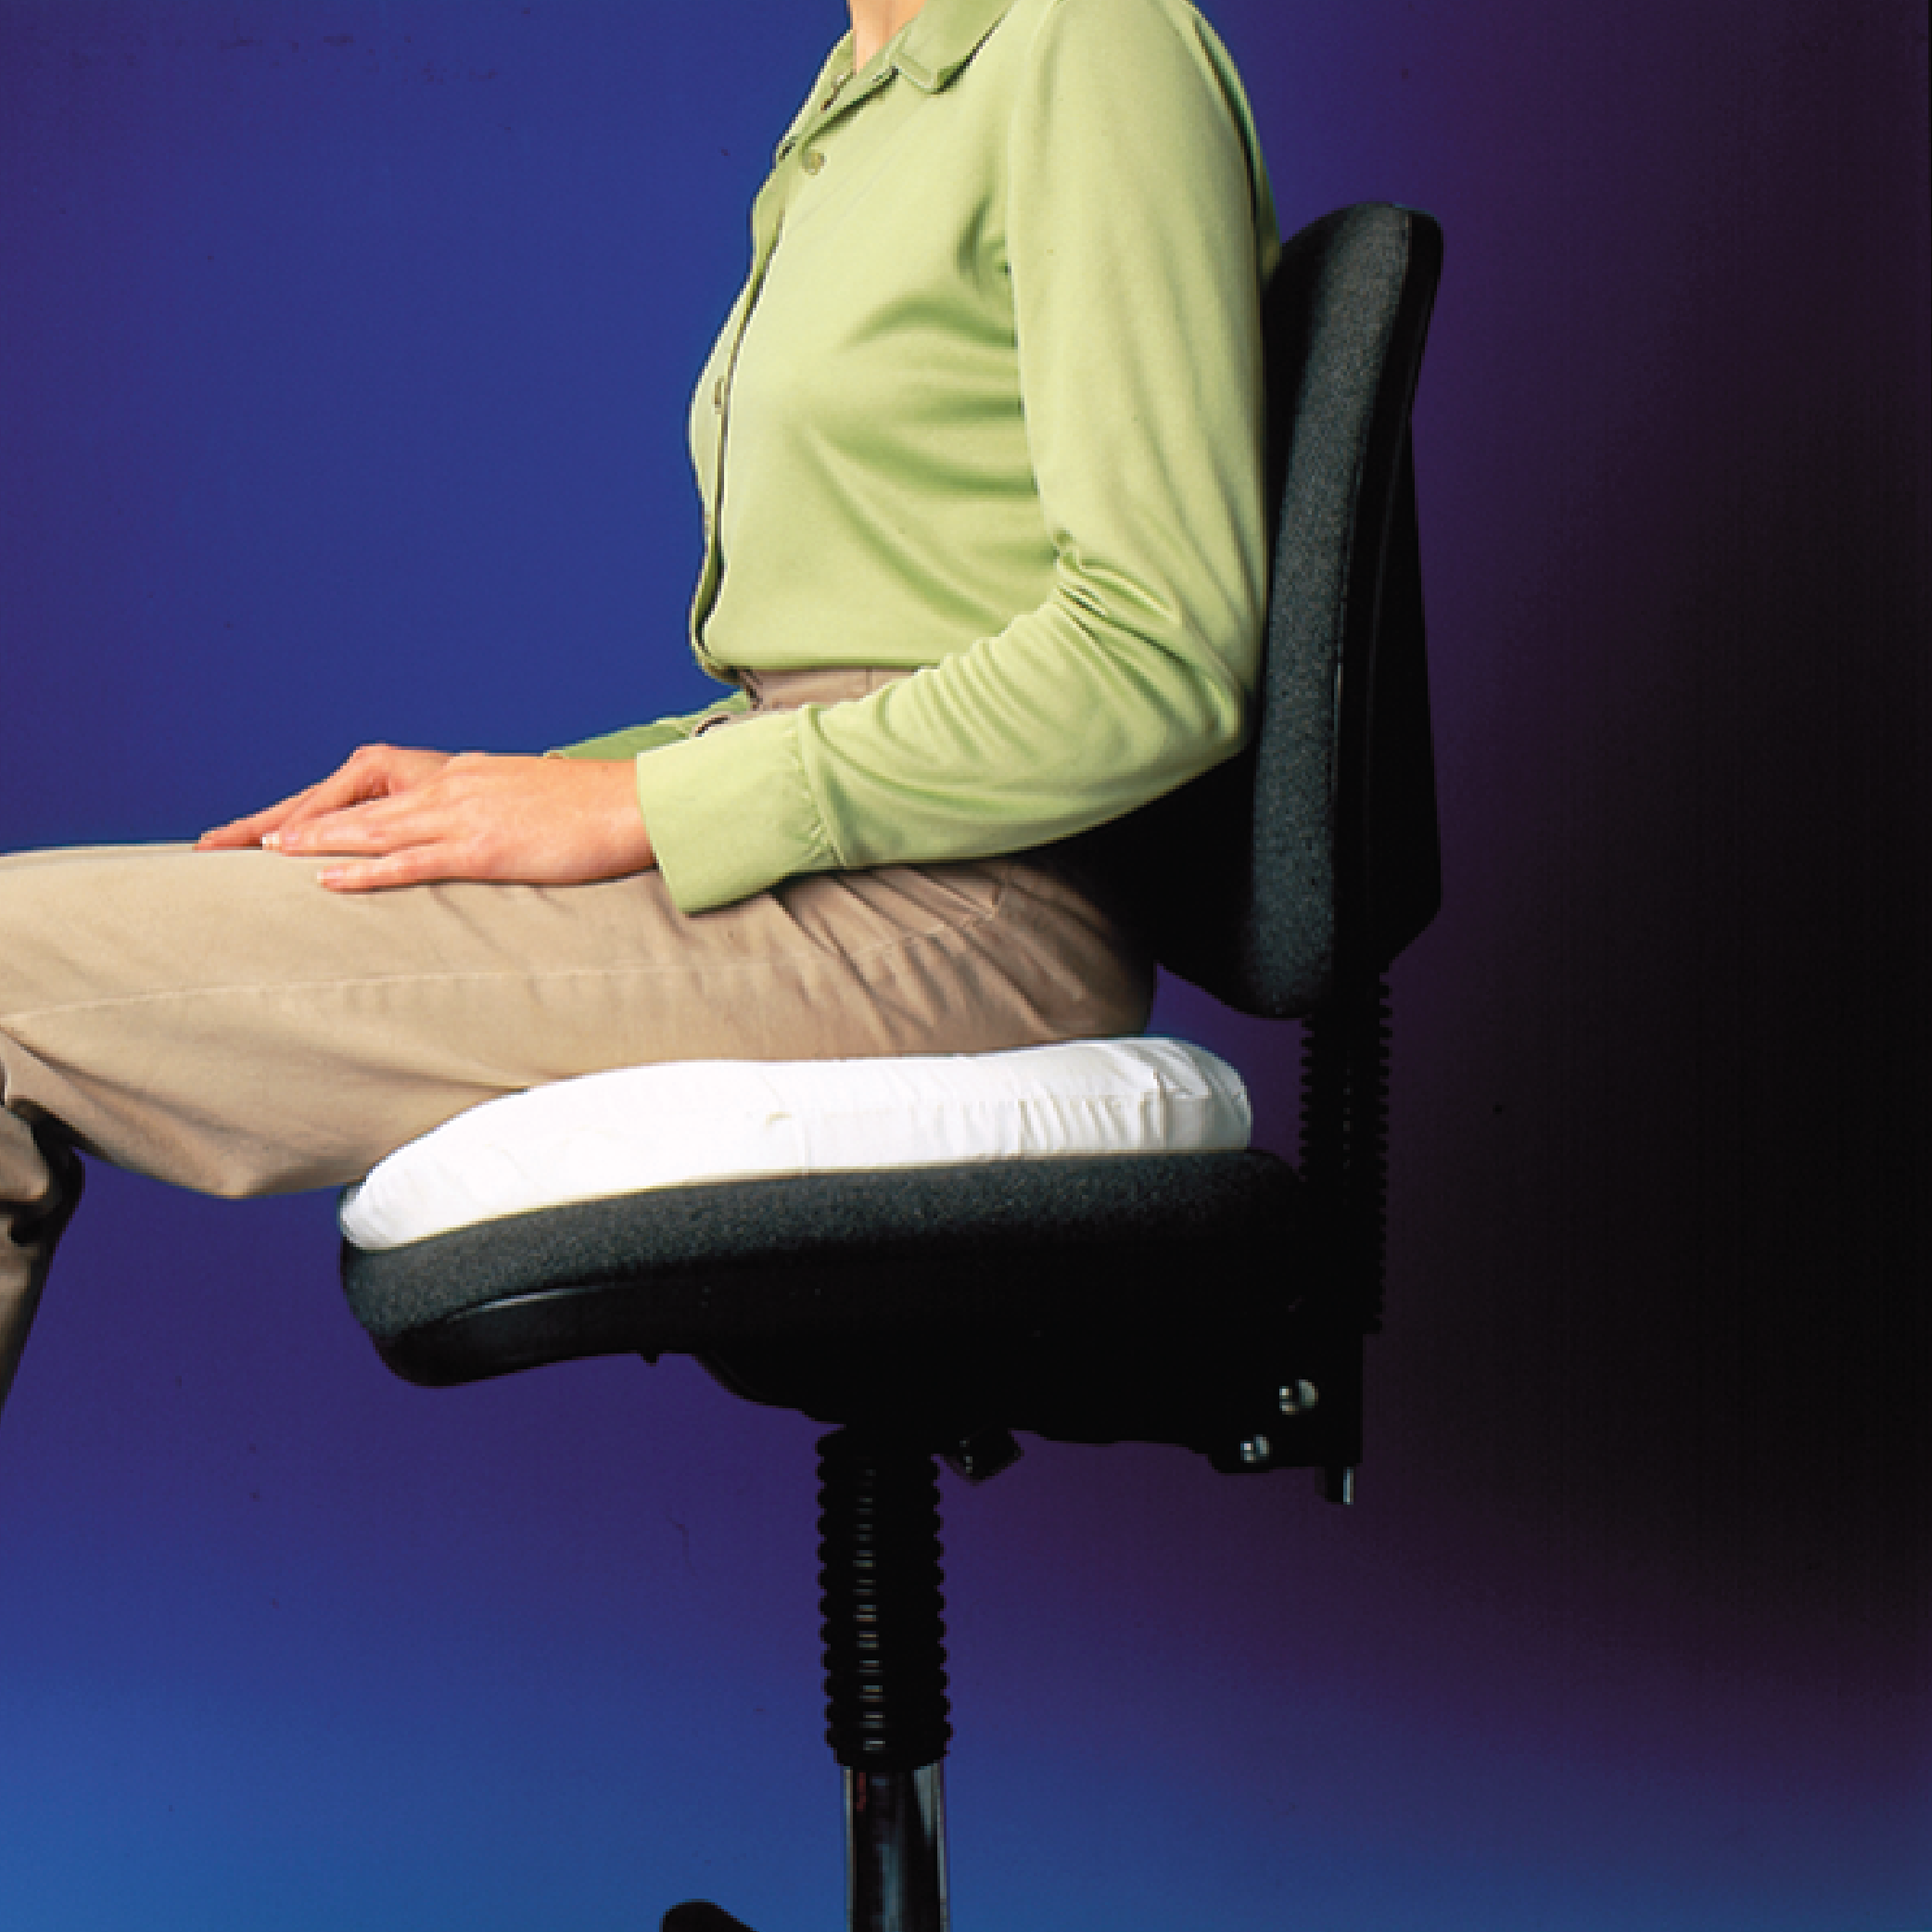 Donut Pillow Memory Foam Petal Tailbone Hemorrhoid Seat Butt Cushion  Breathable Comfort Orthopedic Chair Pillow